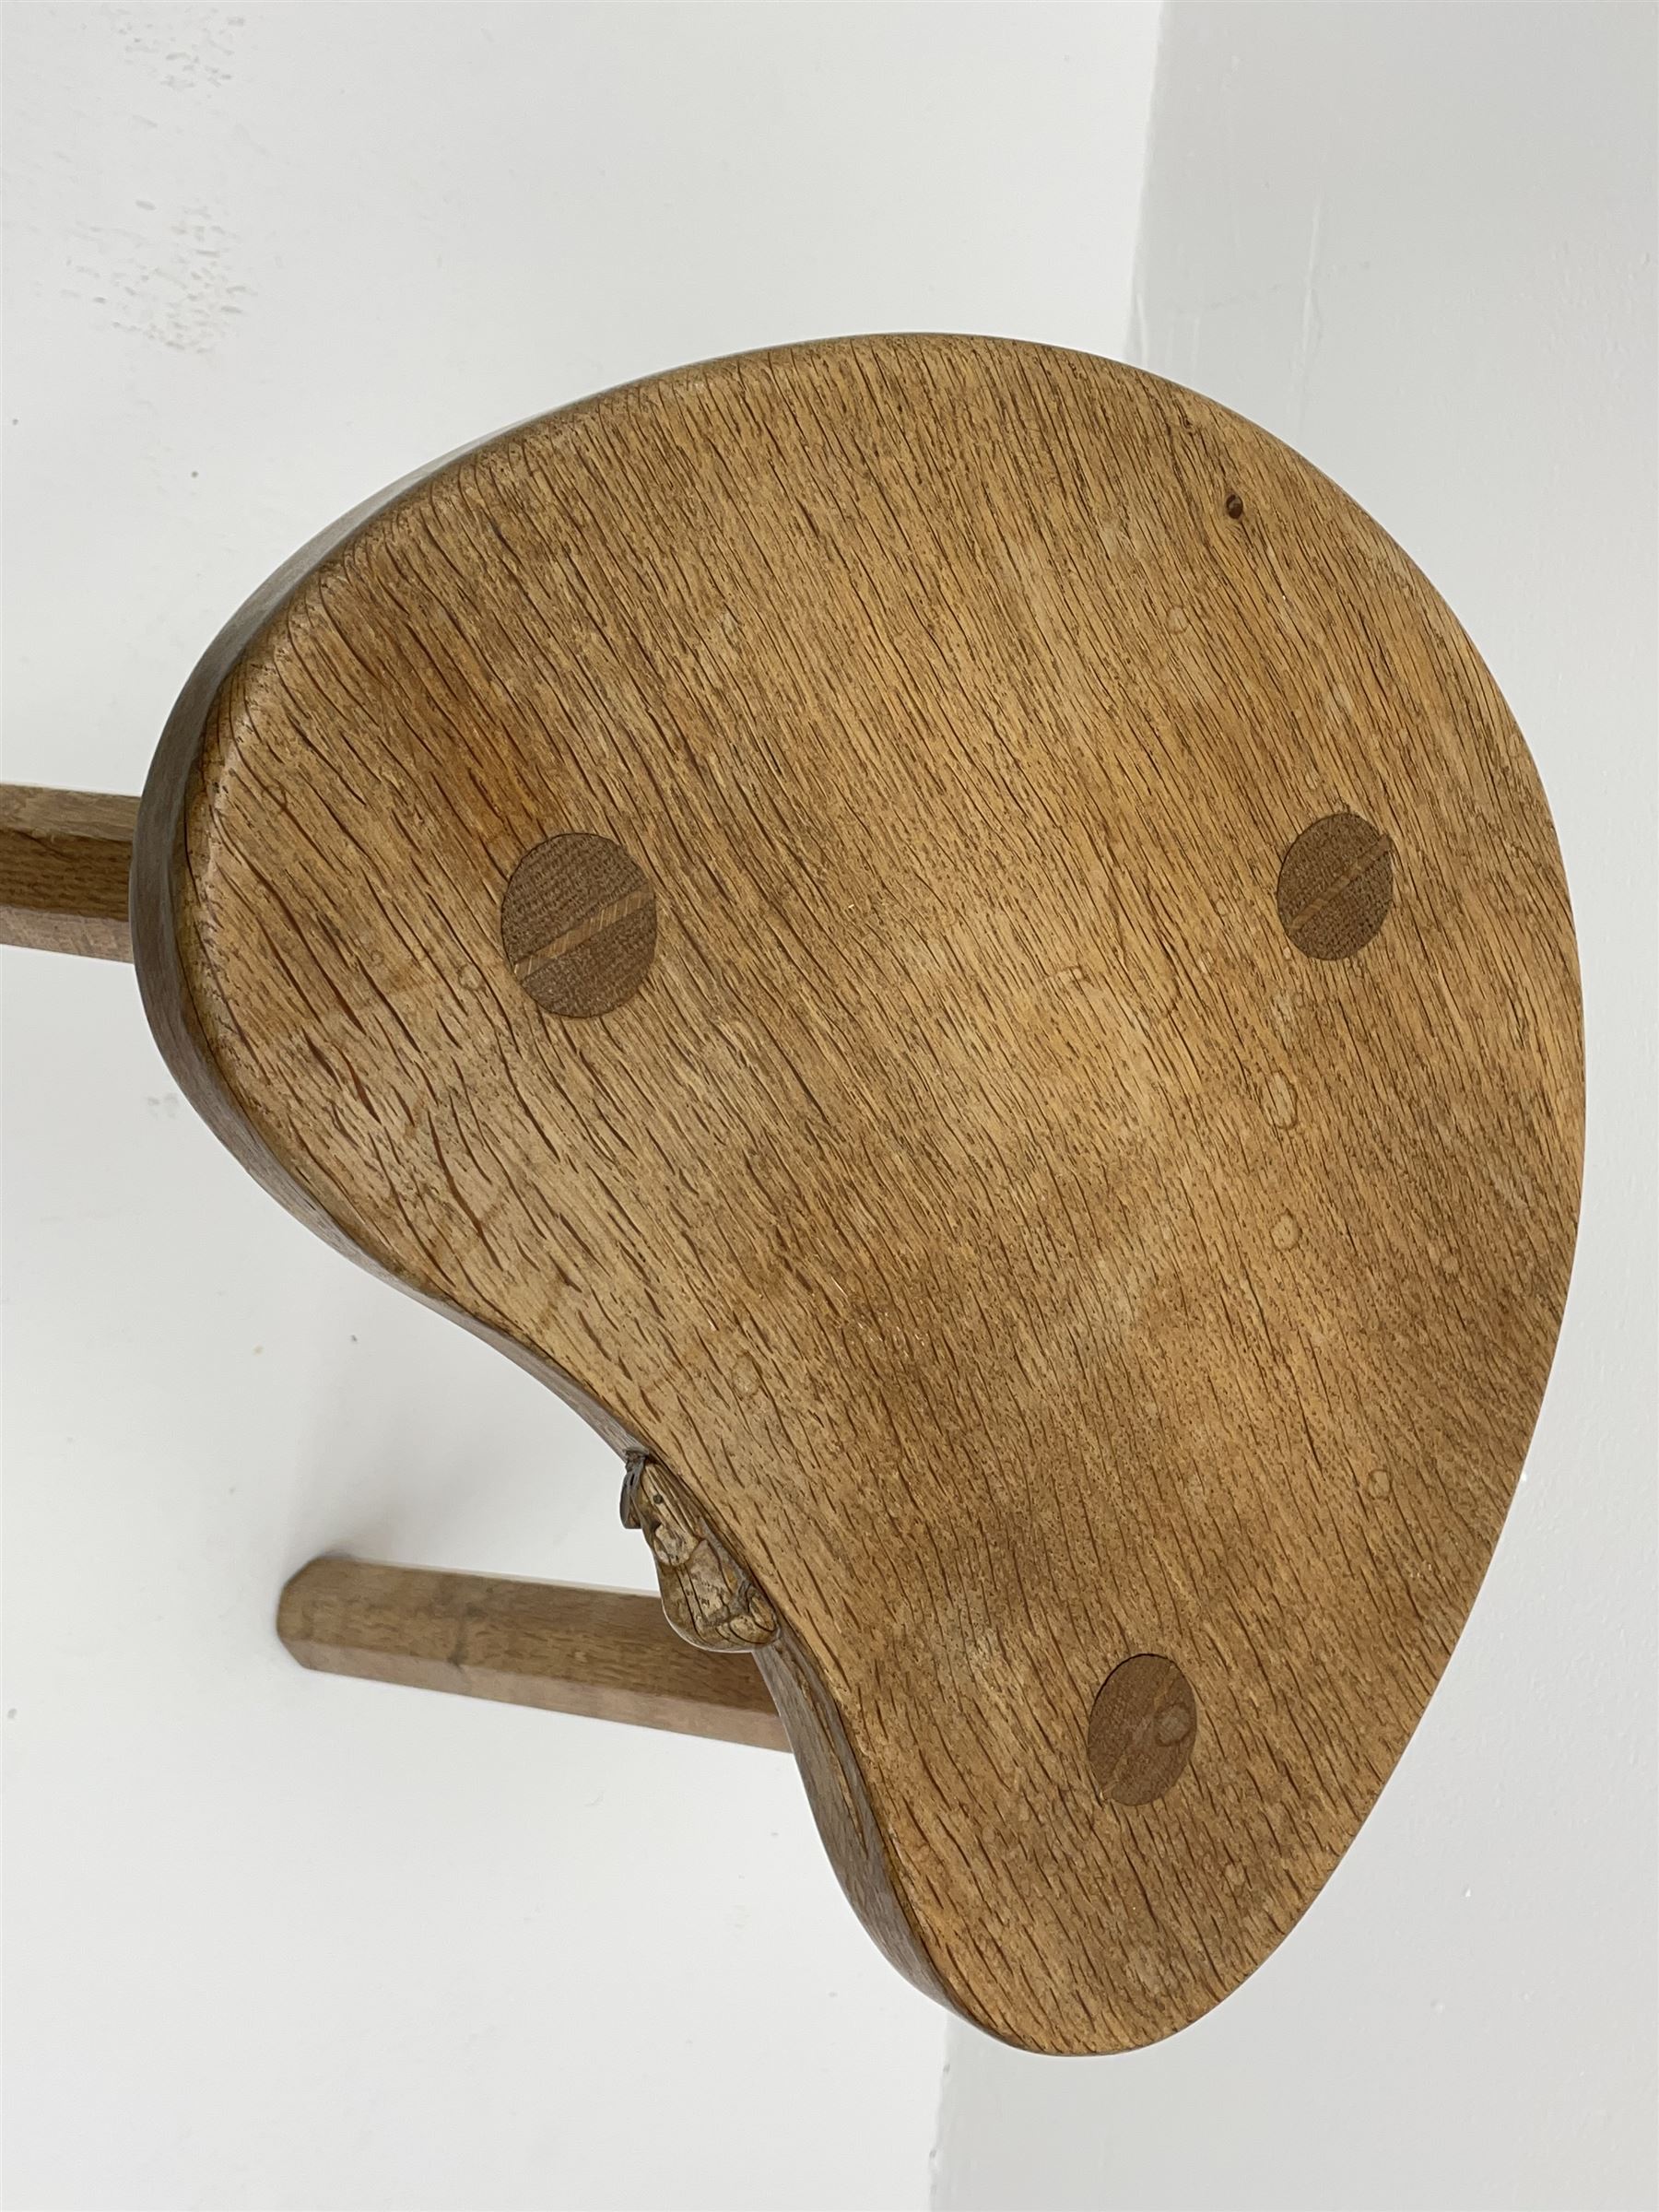 'Mouseman' oak three legged stool with dished kidney shaped seat - Image 3 of 3